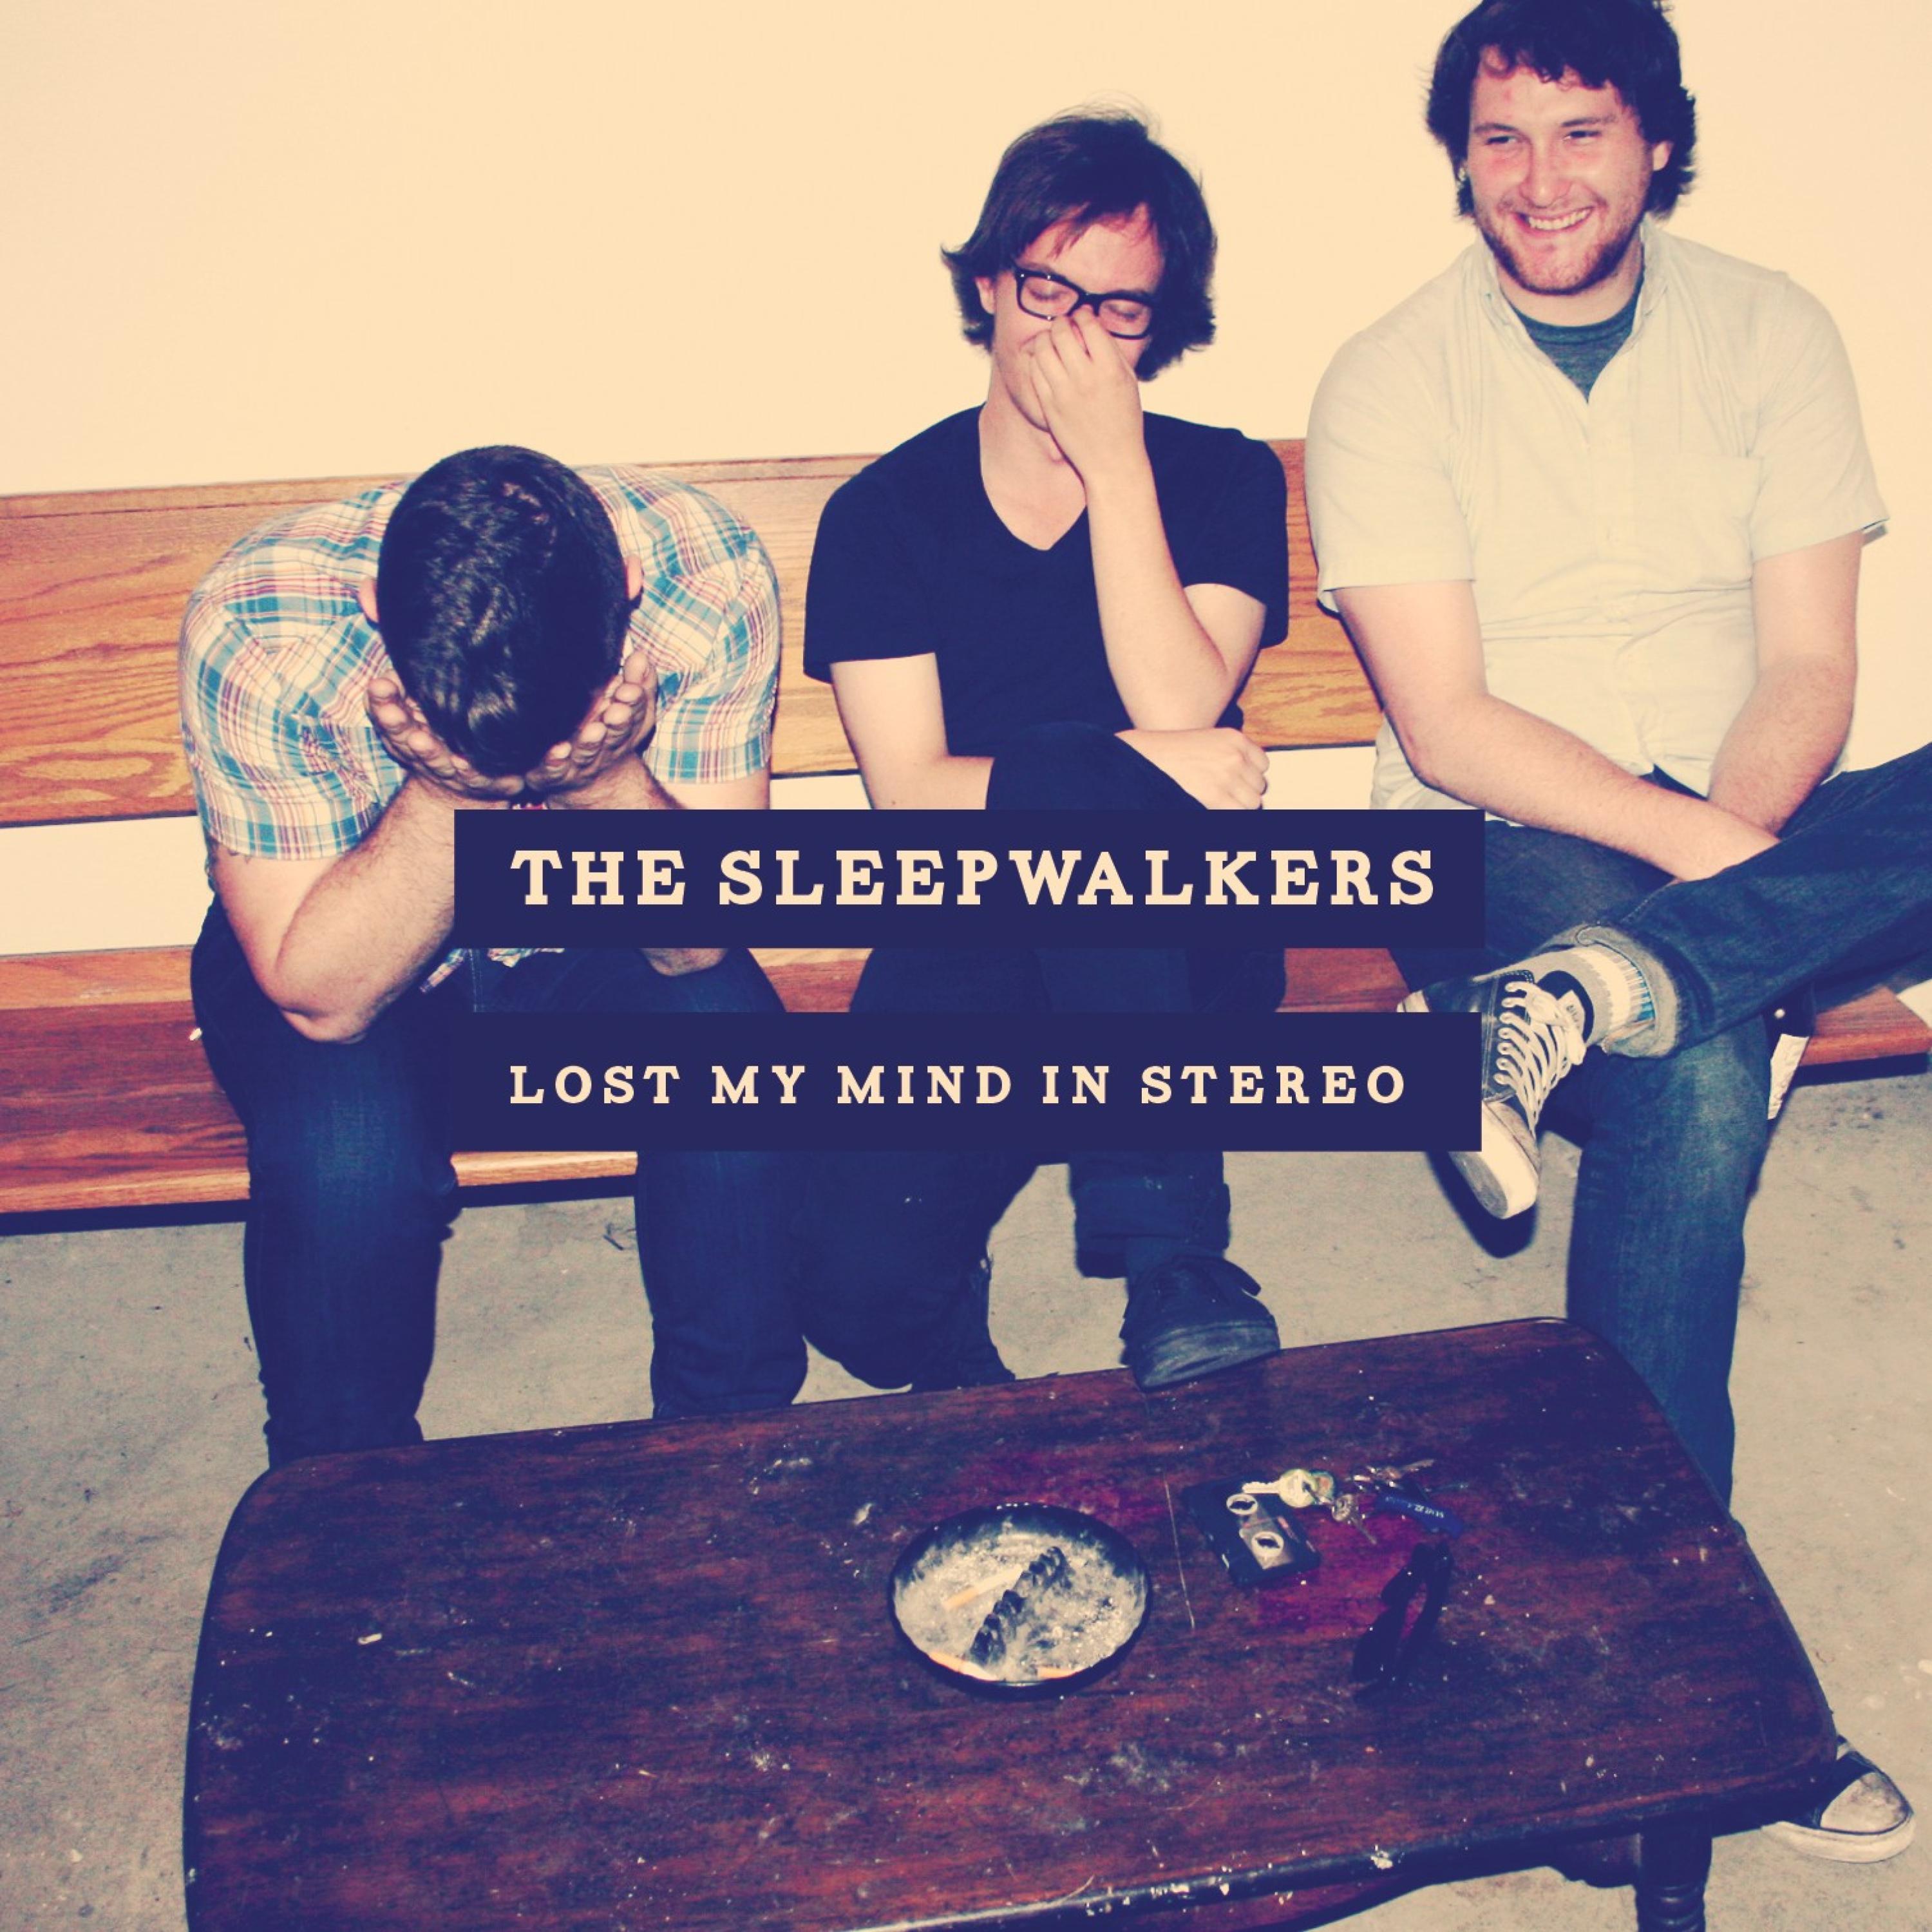 The Sleepwalkers - Come Around